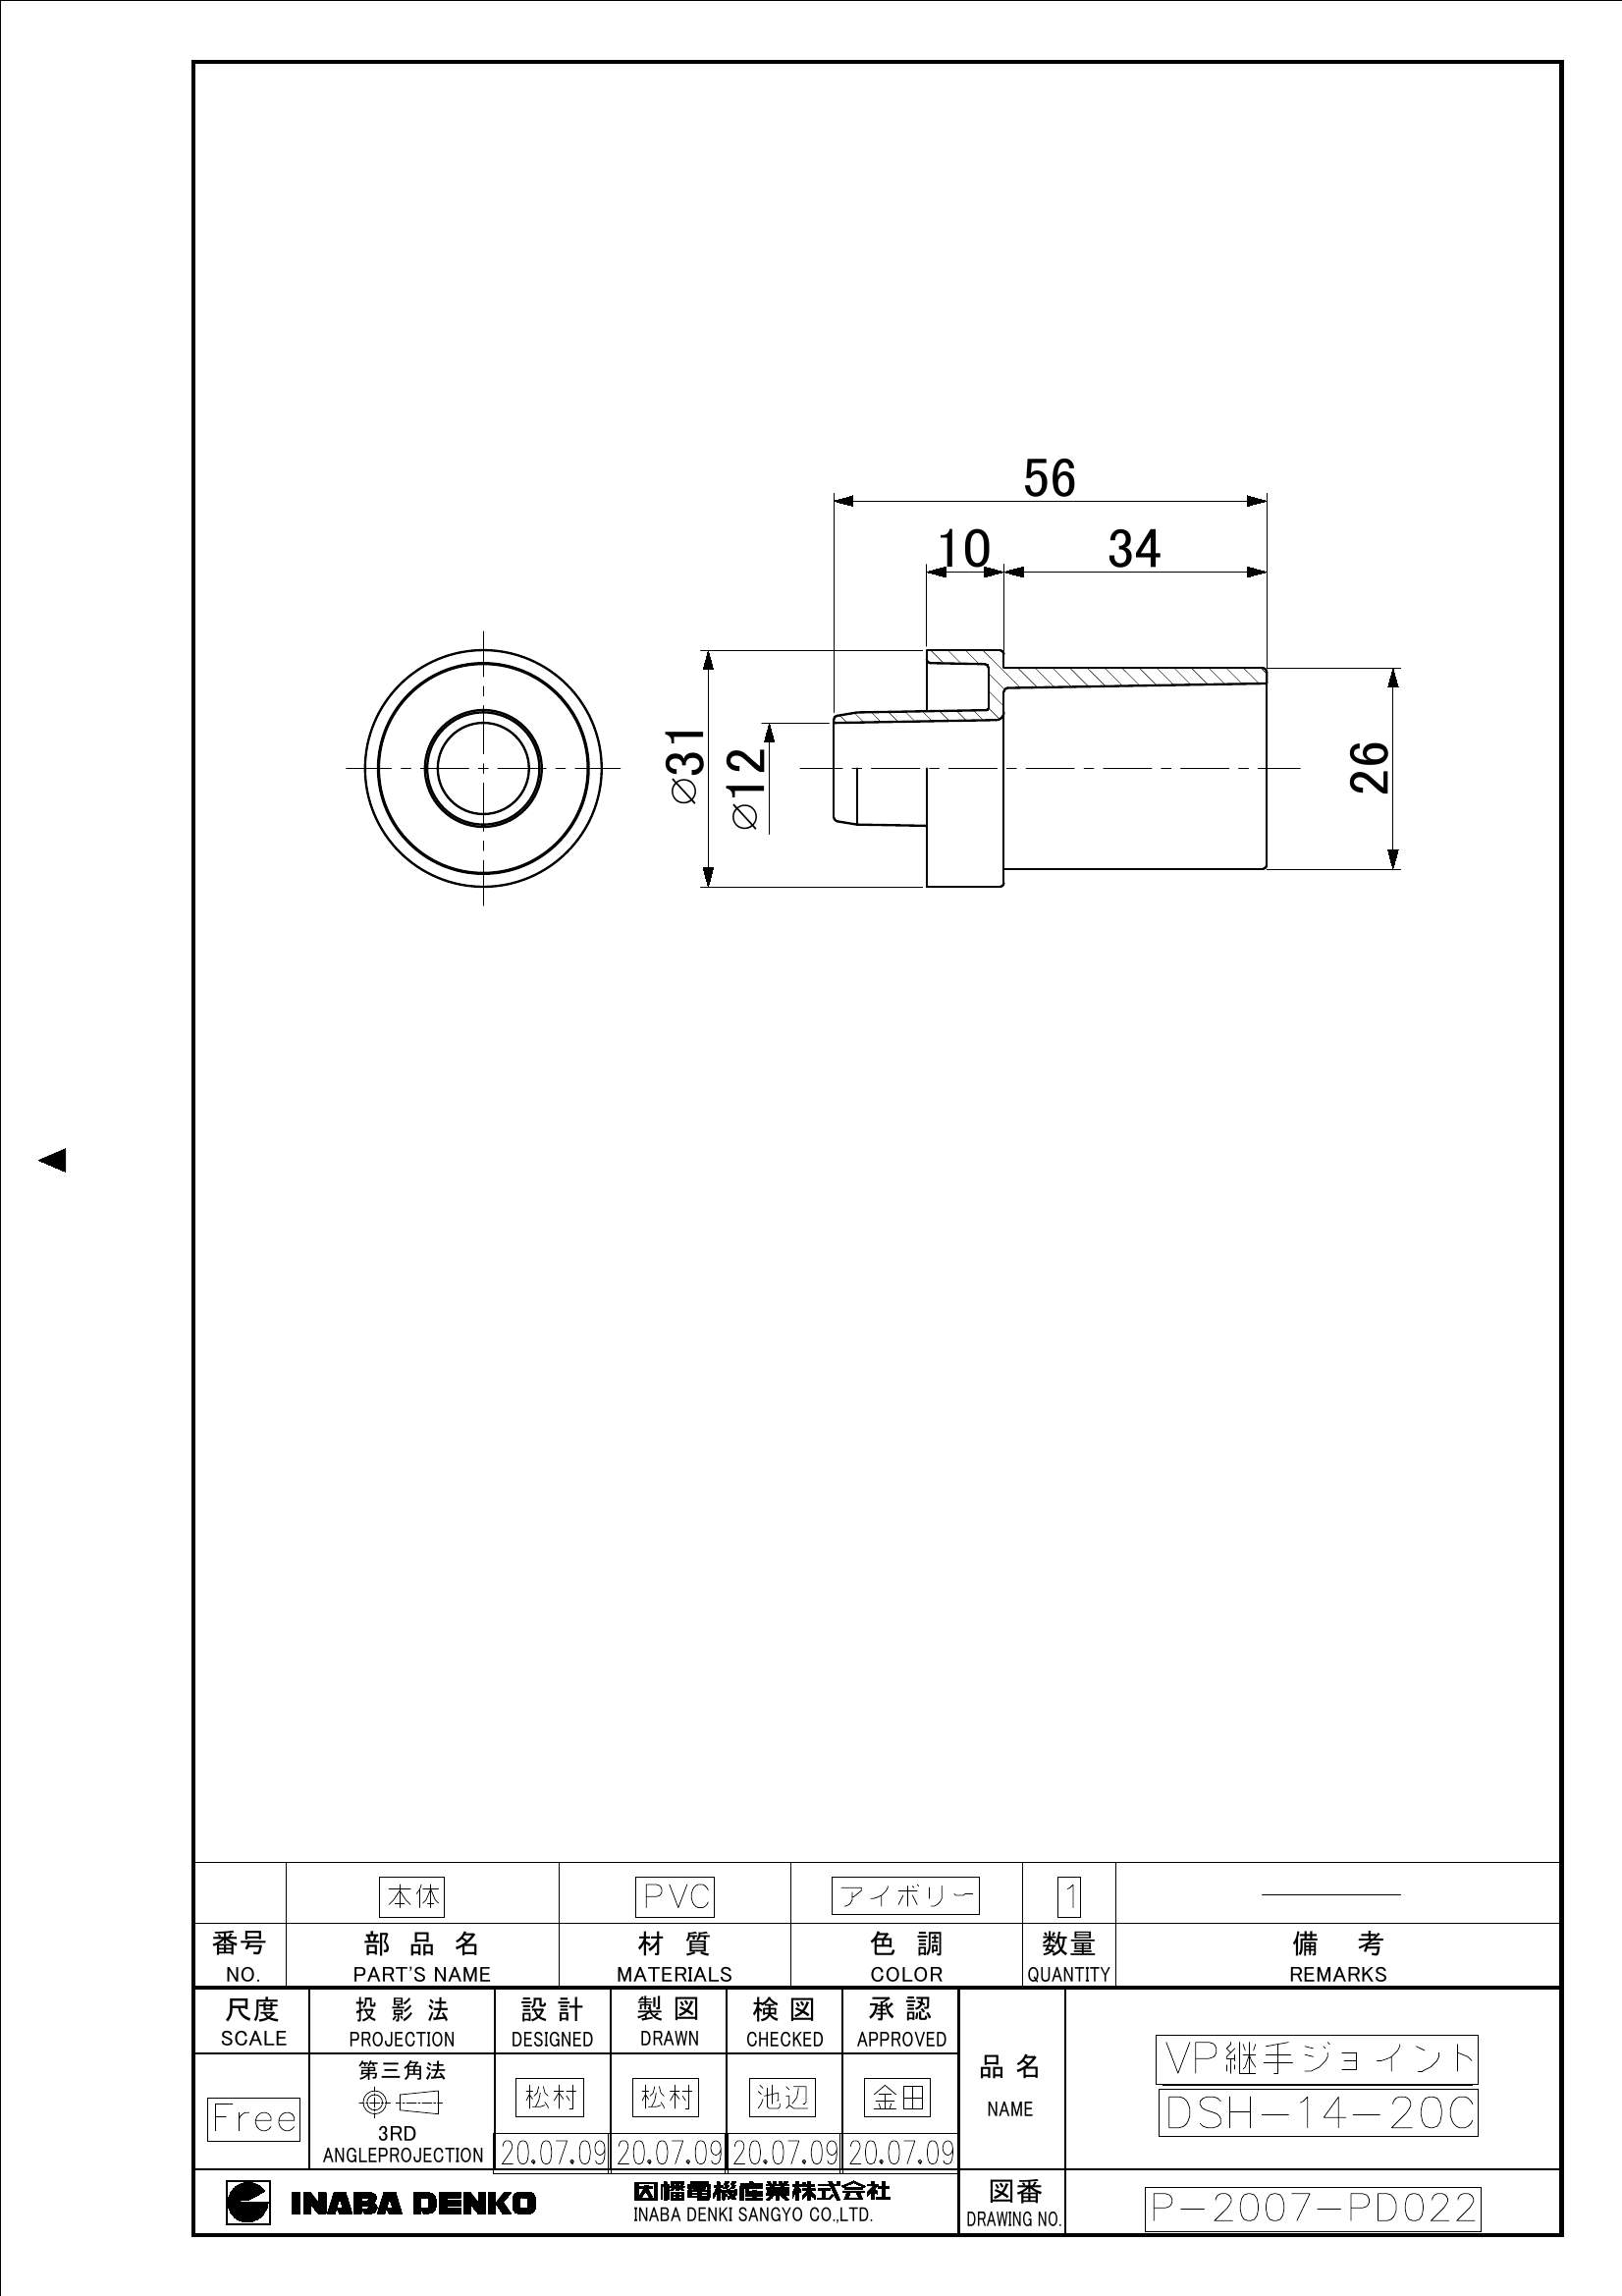 DSH-14-20C-仕様図面_20200826.pdf